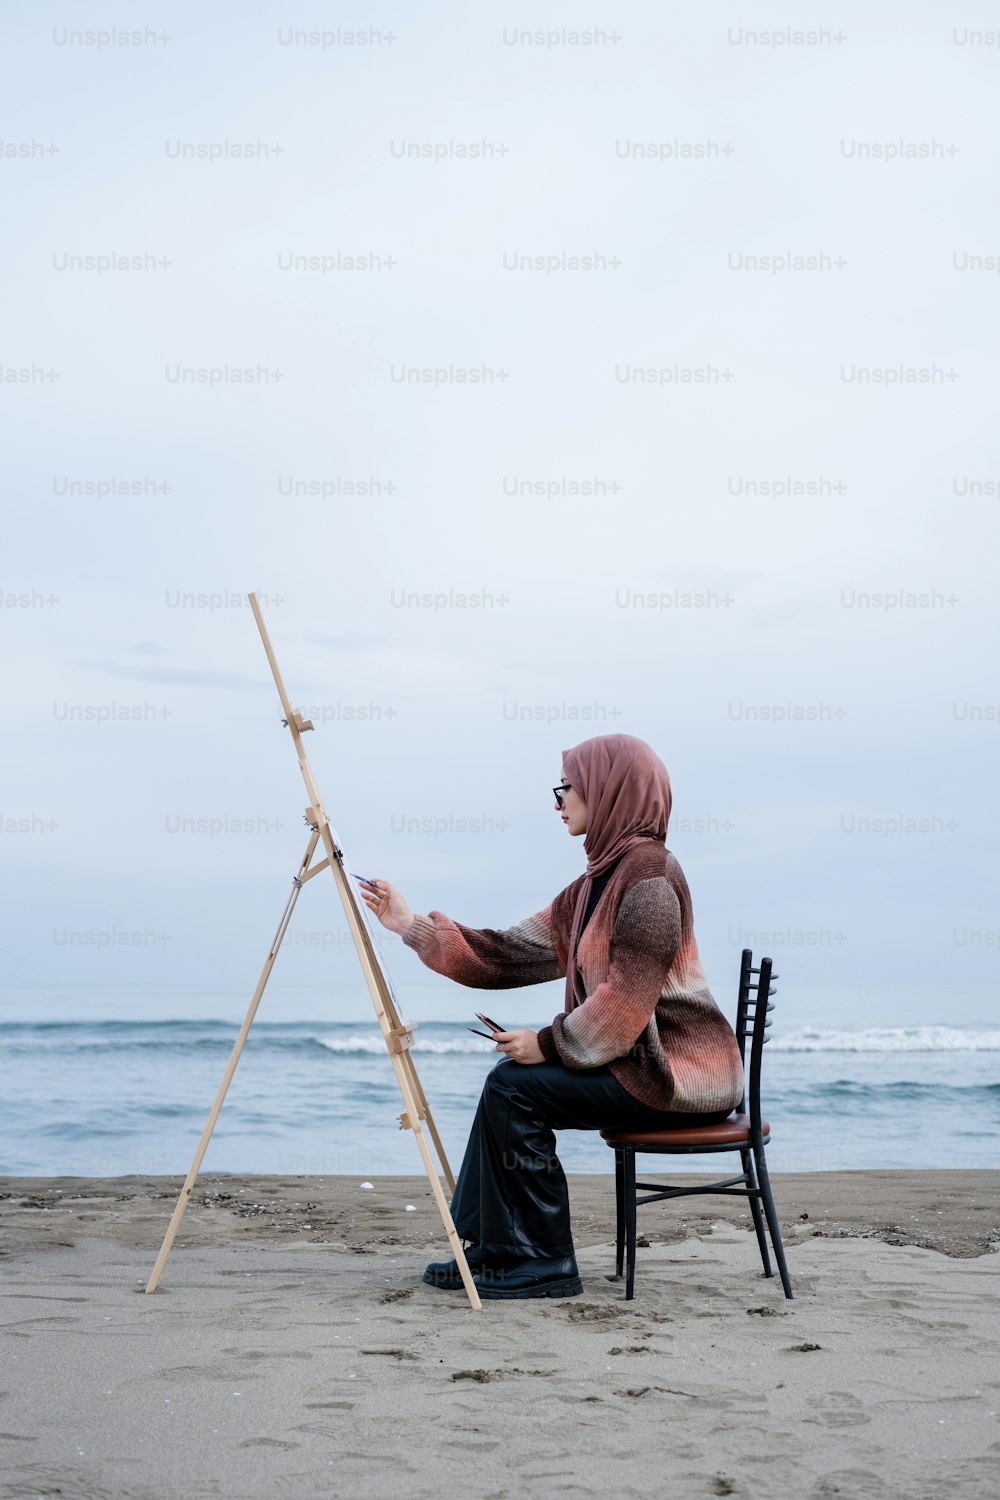 una persona seduta su una sedia su una spiaggia